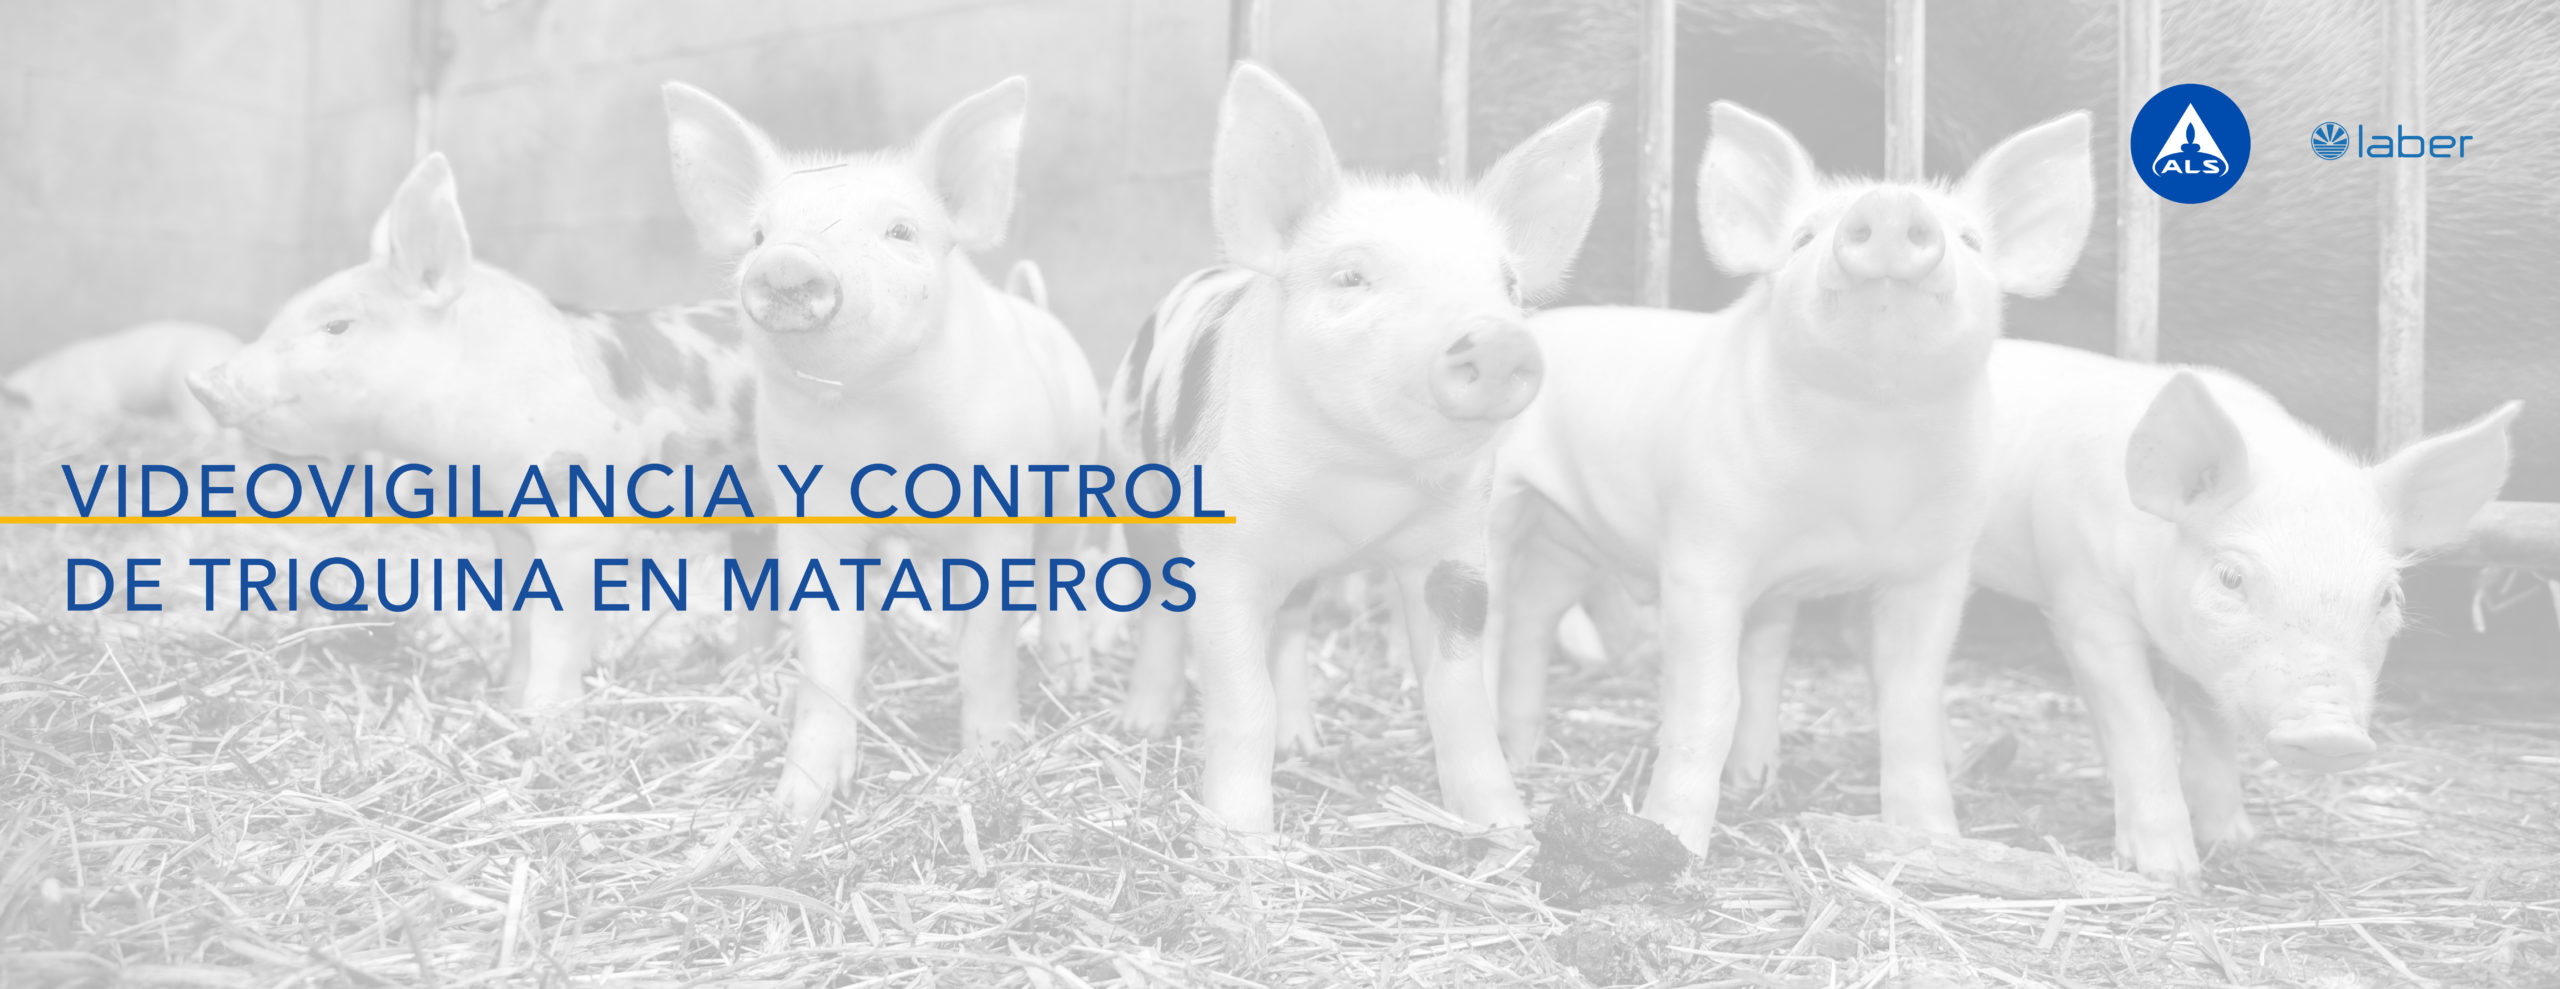 Videovigilancia y control de triquina en mataderos, ALS Galicia, Laber